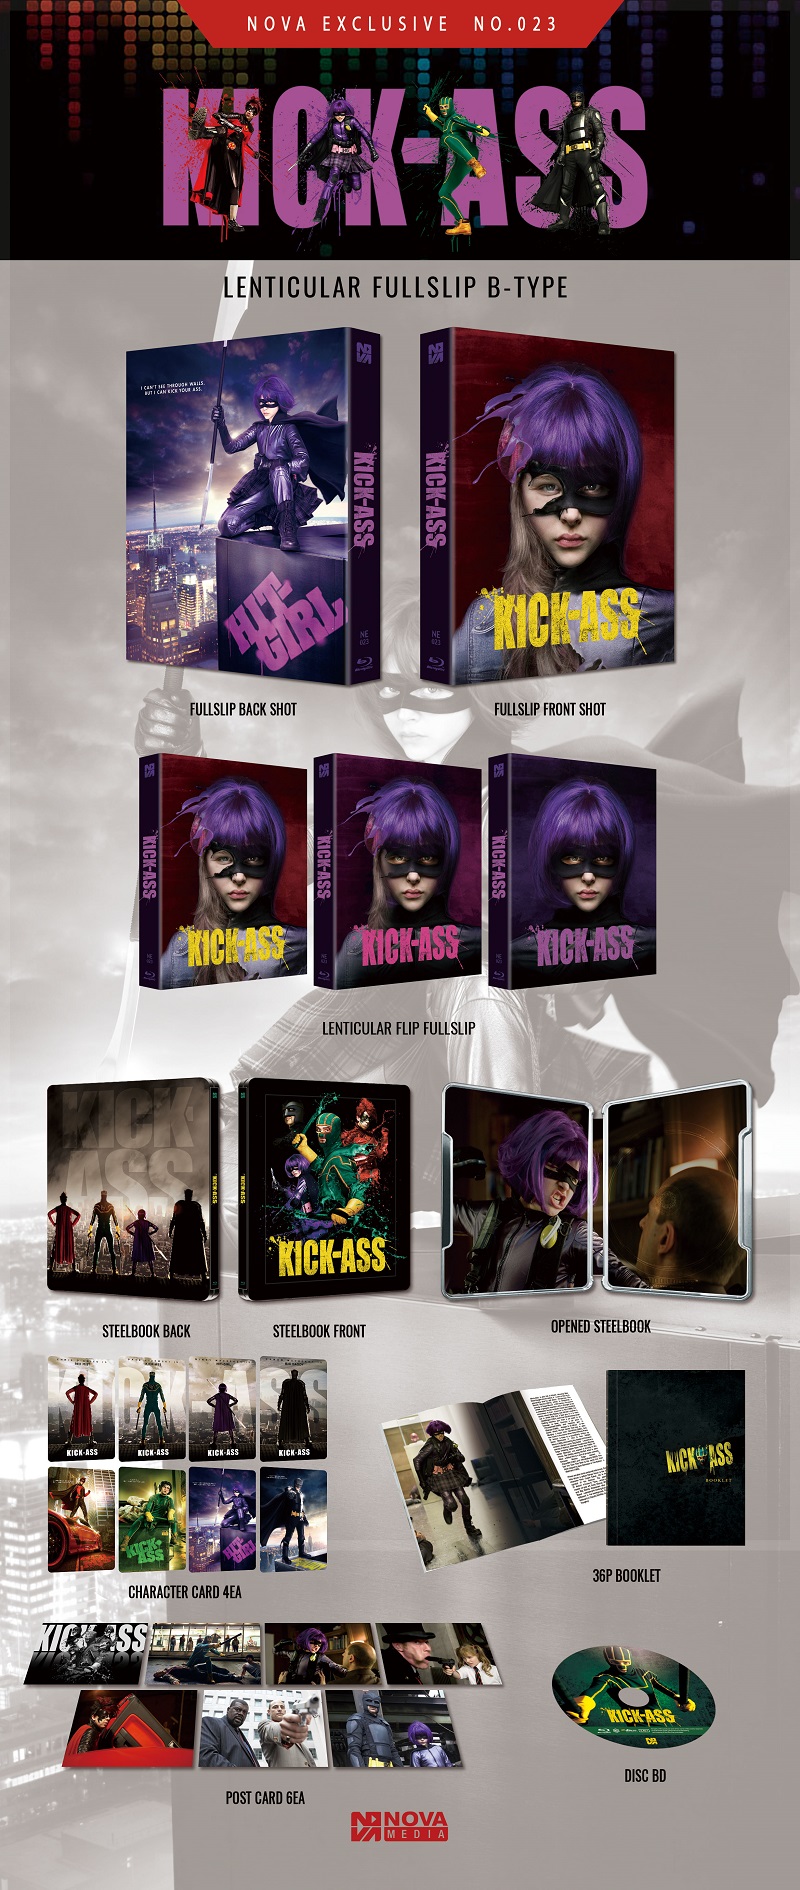 Kick-Ass Novamedia Exclusive Blu-ray Hit-Girl Version